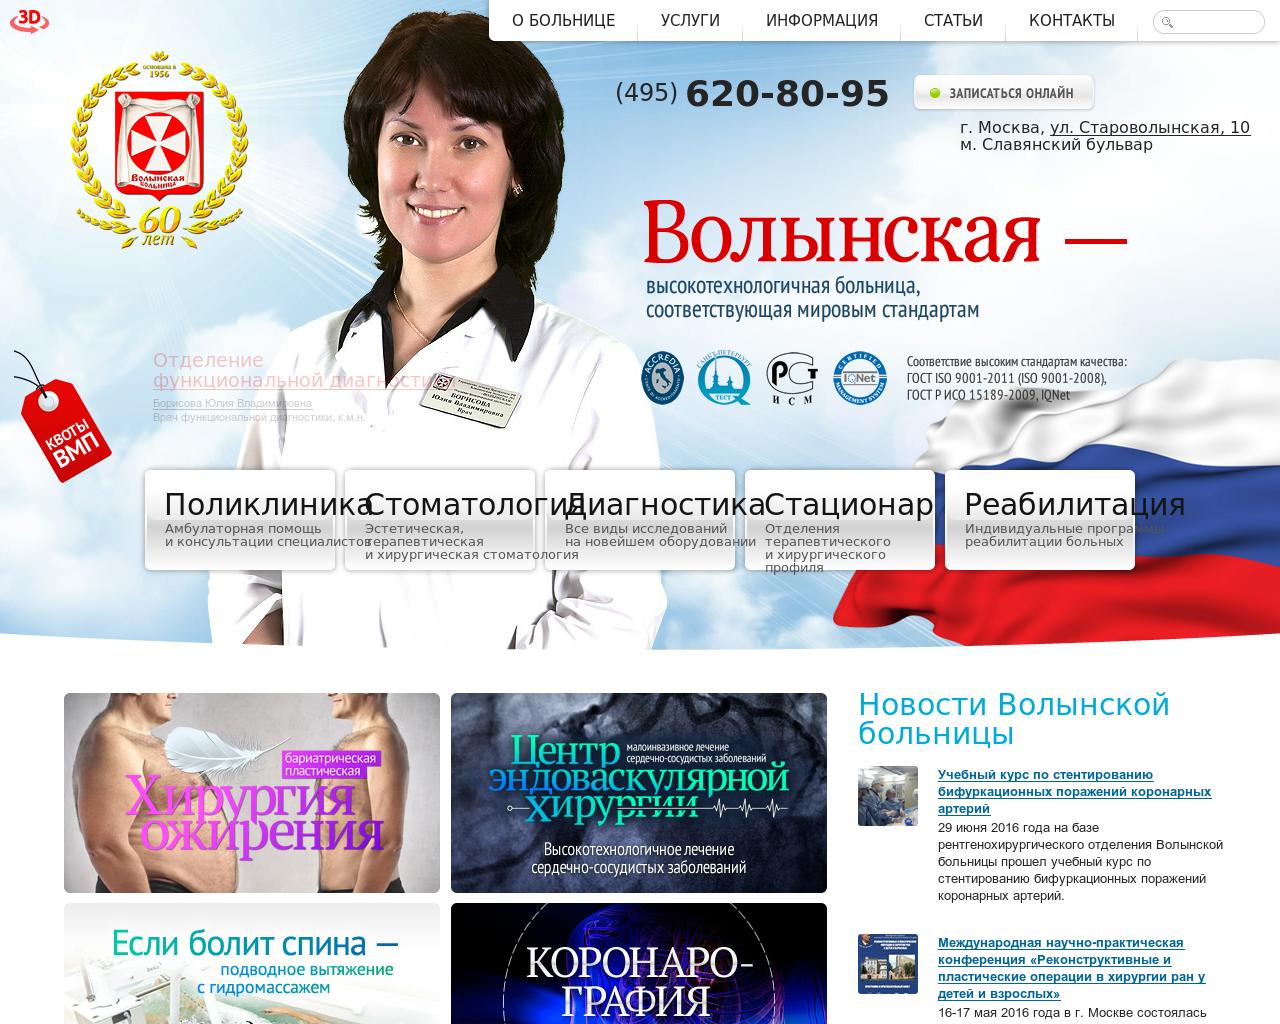 Изображение сайта volynka.ru в разрешении 1280x1024